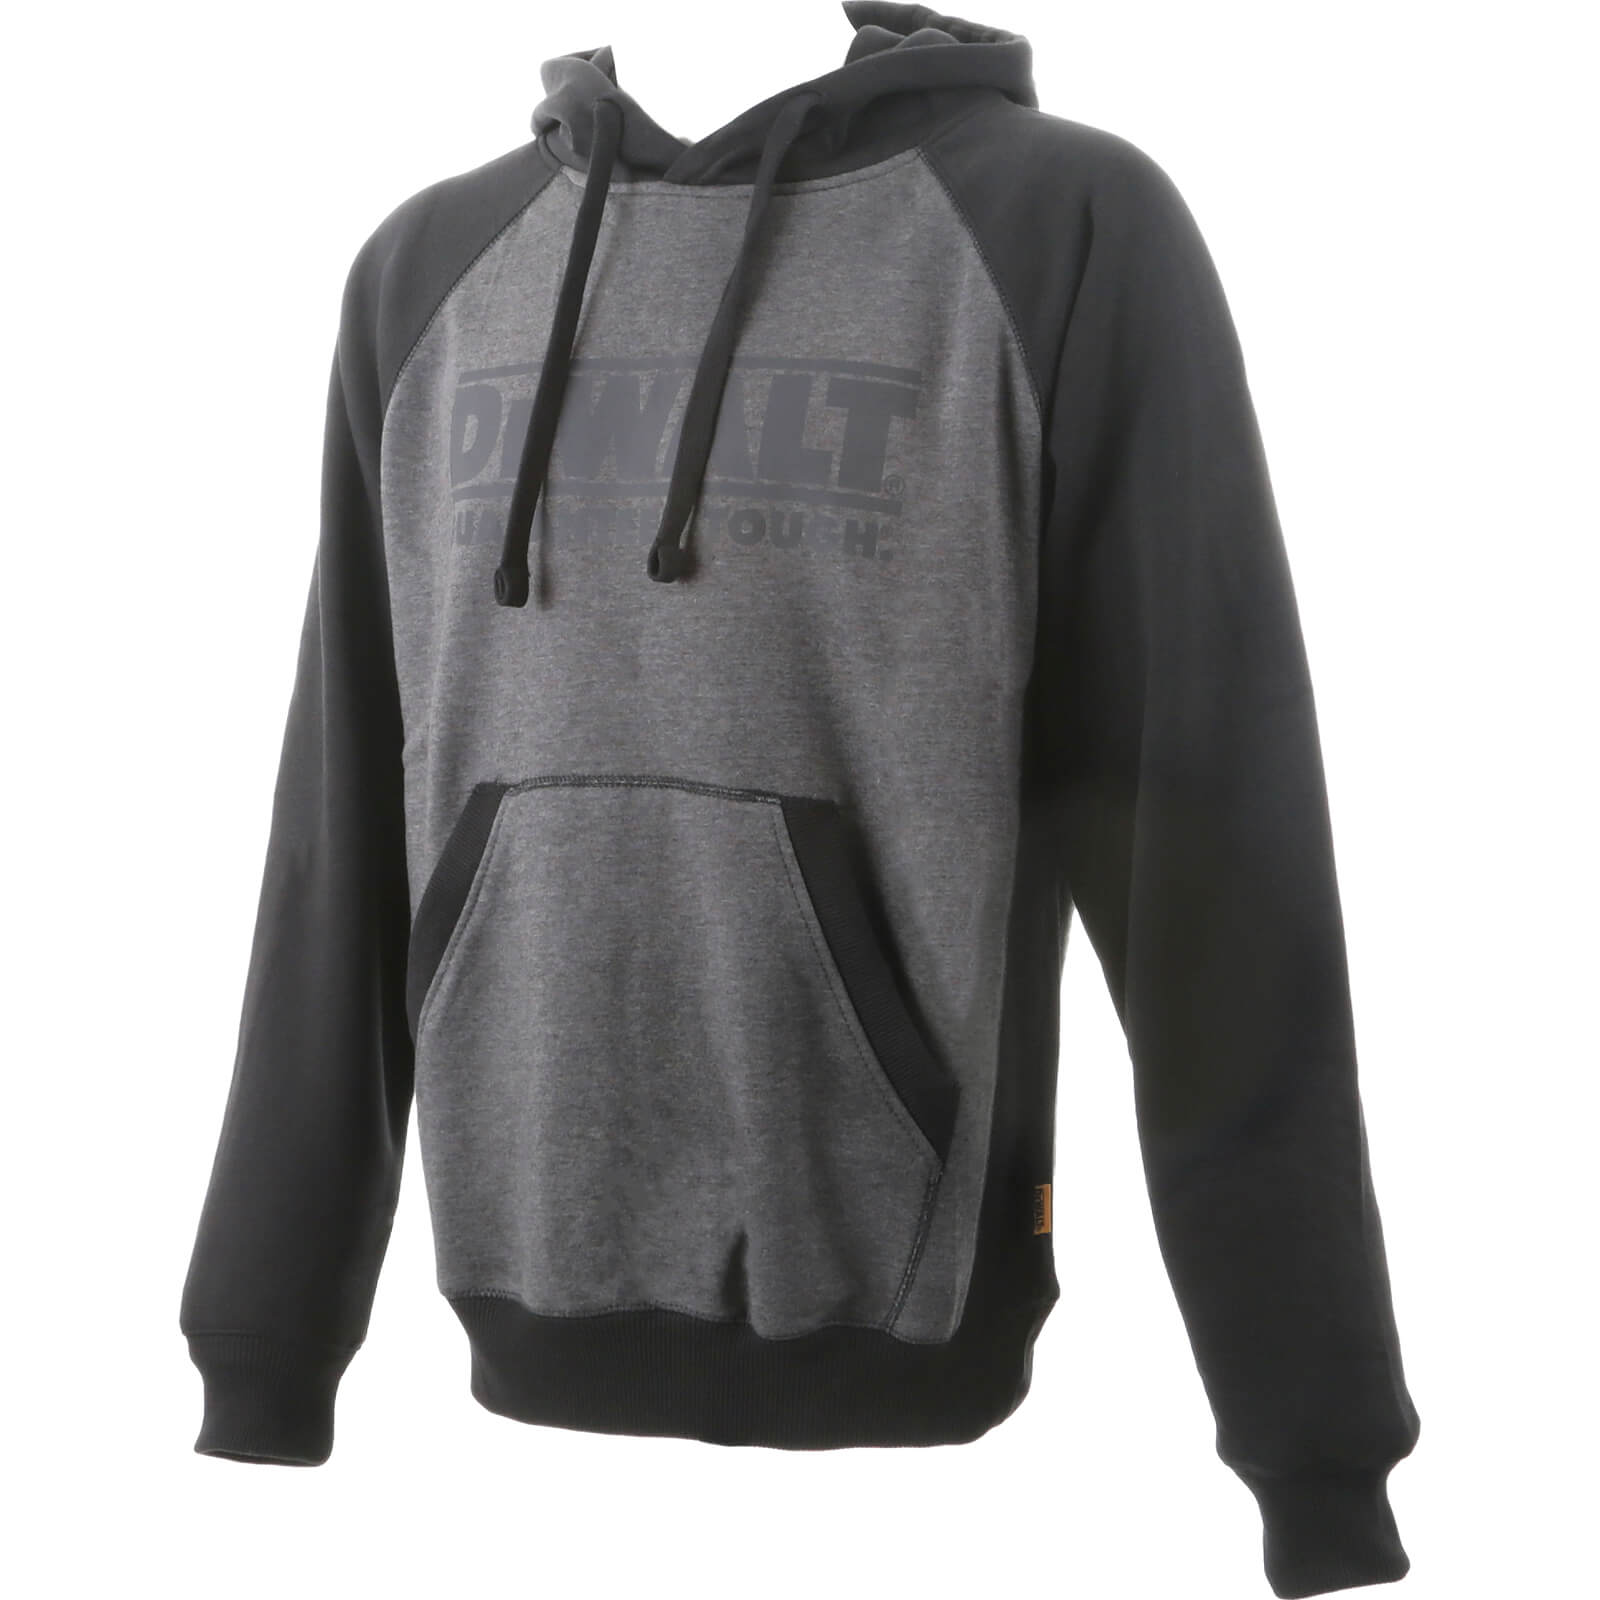 DeWalt Stratford Hoodie Sweatshirt Black / Grey XL